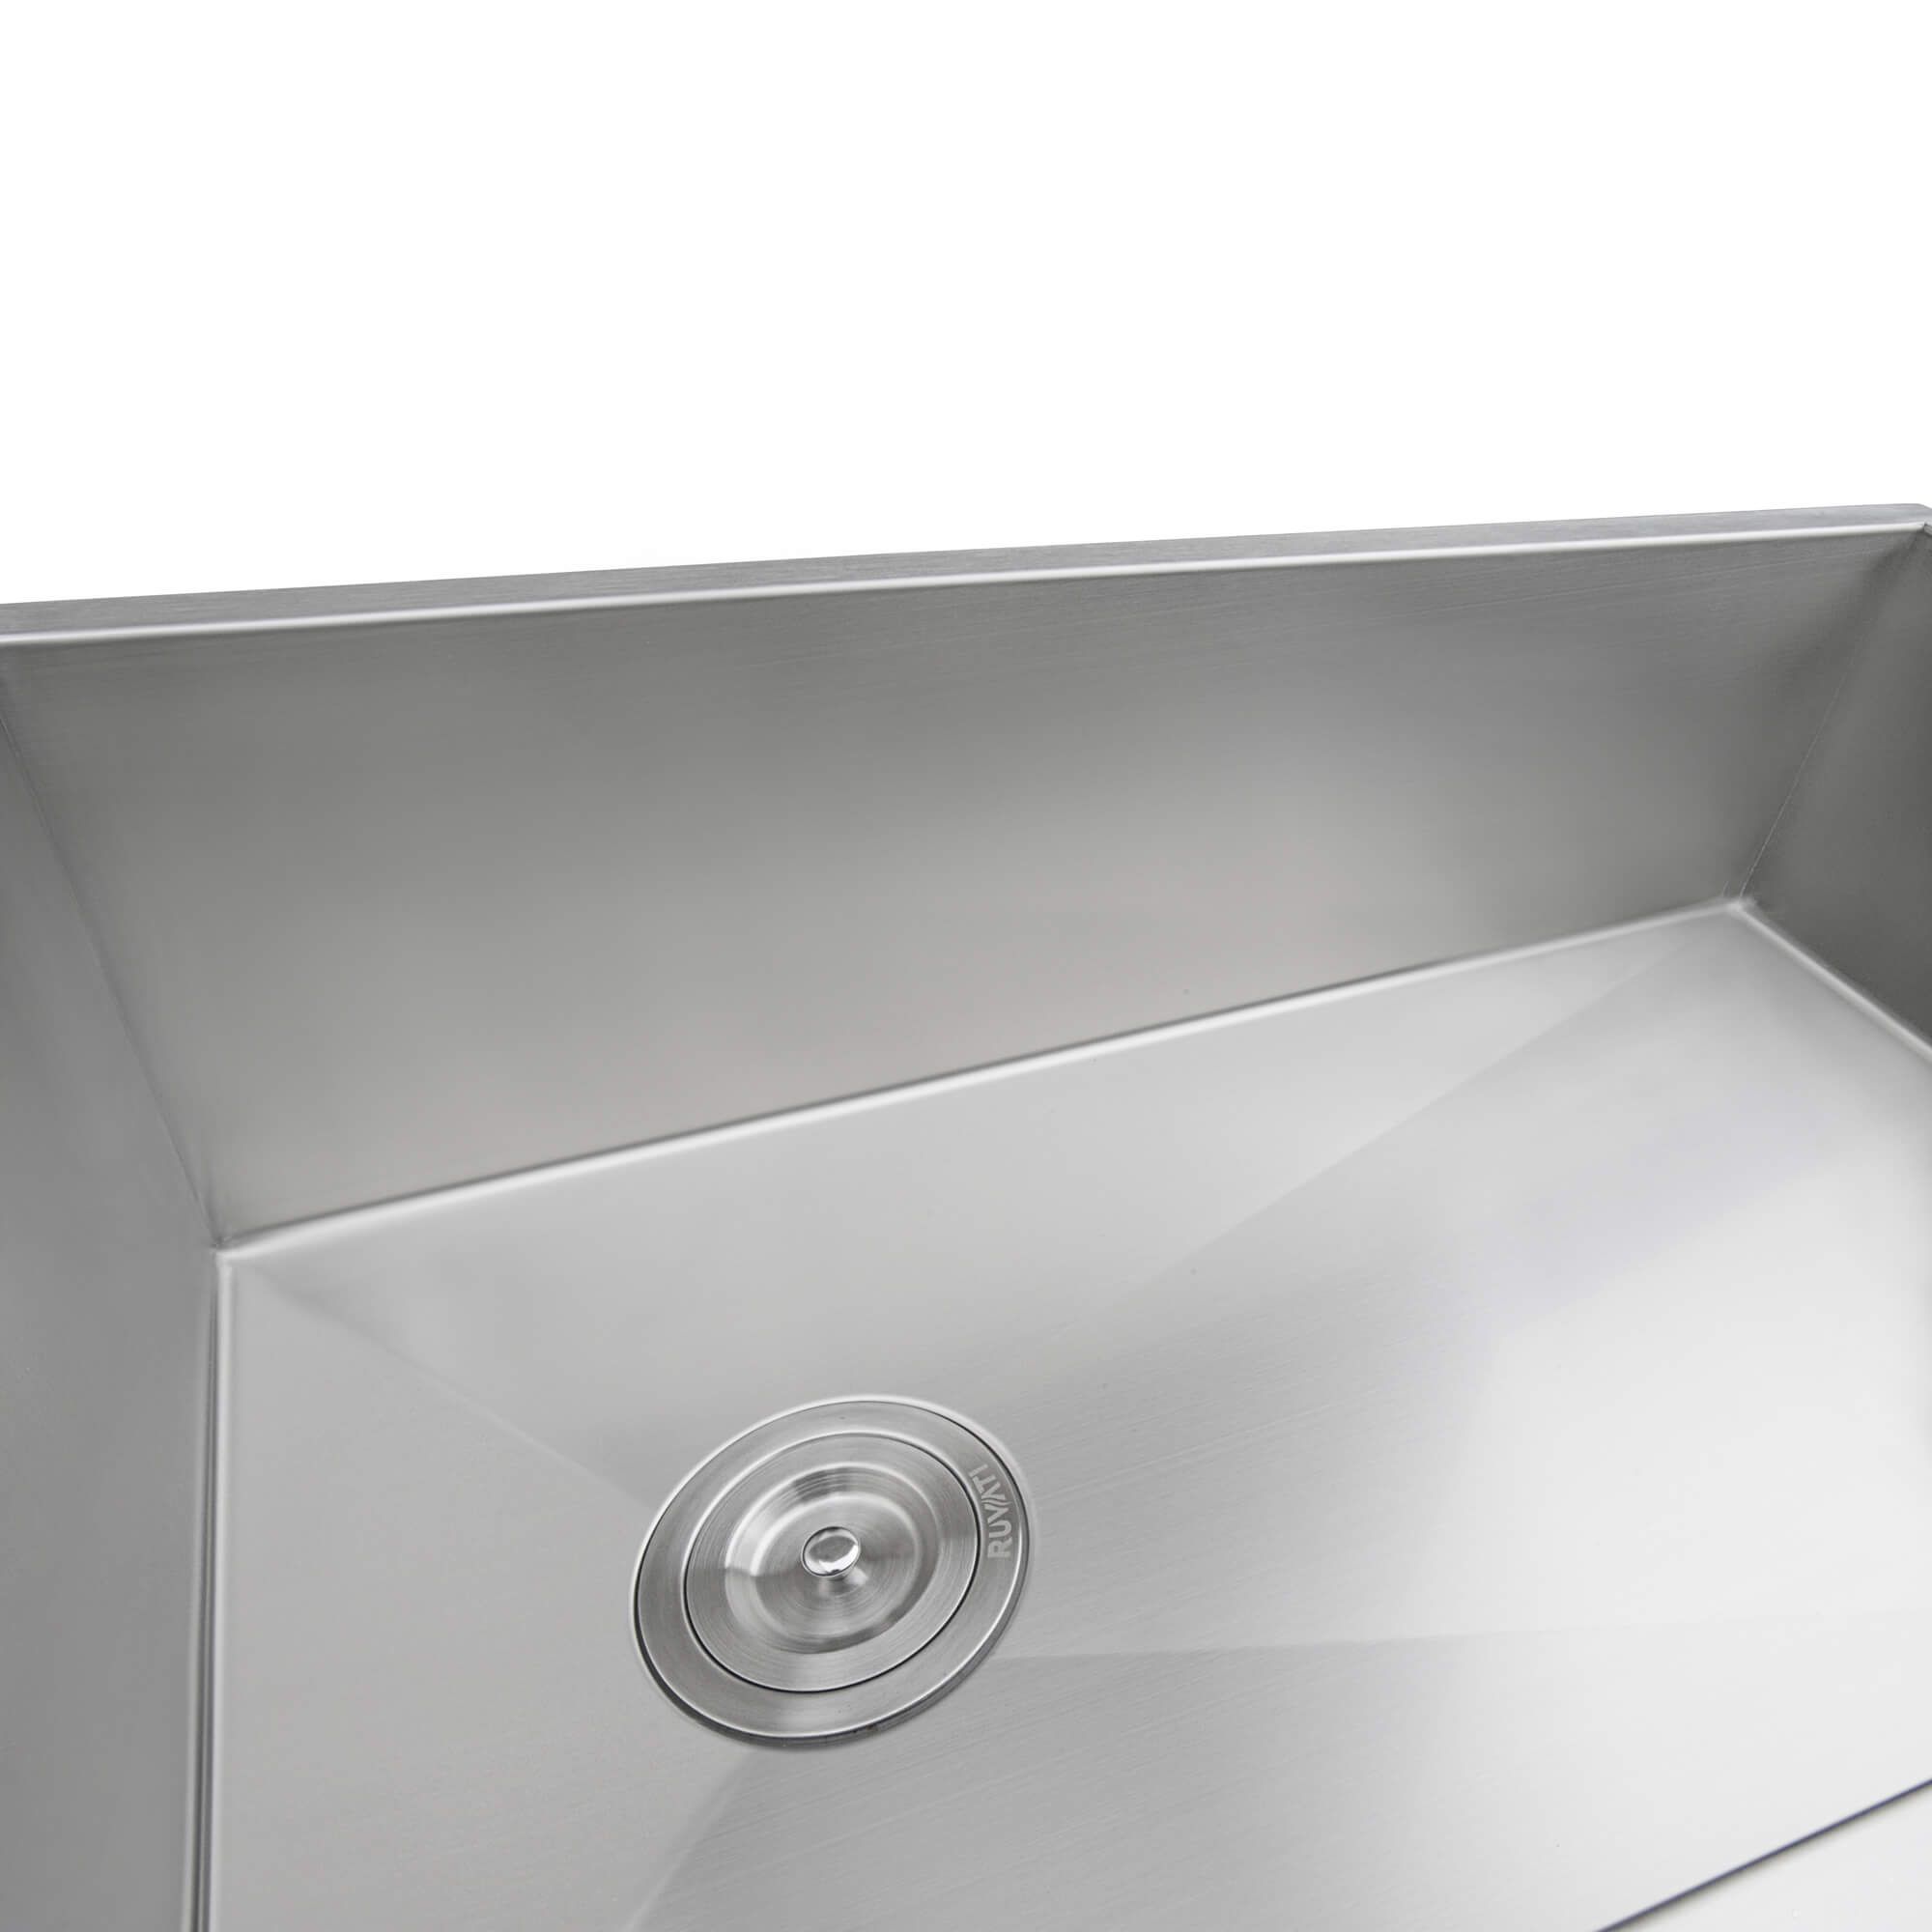 Ruvati 36-inch Slope Bottom Offset Drain Reversible Kitchen Sink 